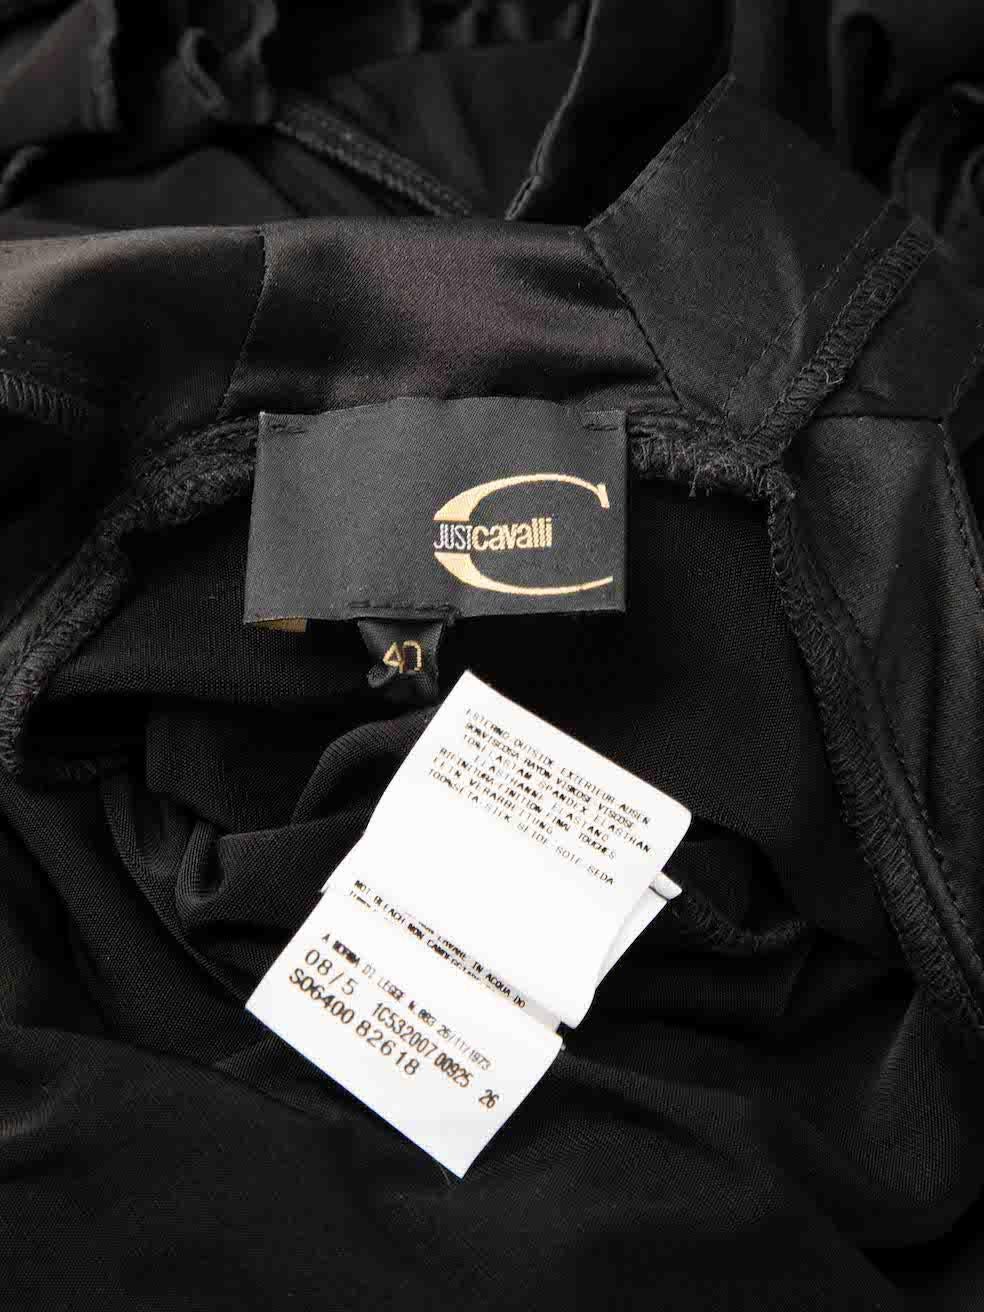 Roberto Cavalli Just Cavalli Black Lace Up Detail Ruffle Mini Dress Size S For Sale 1